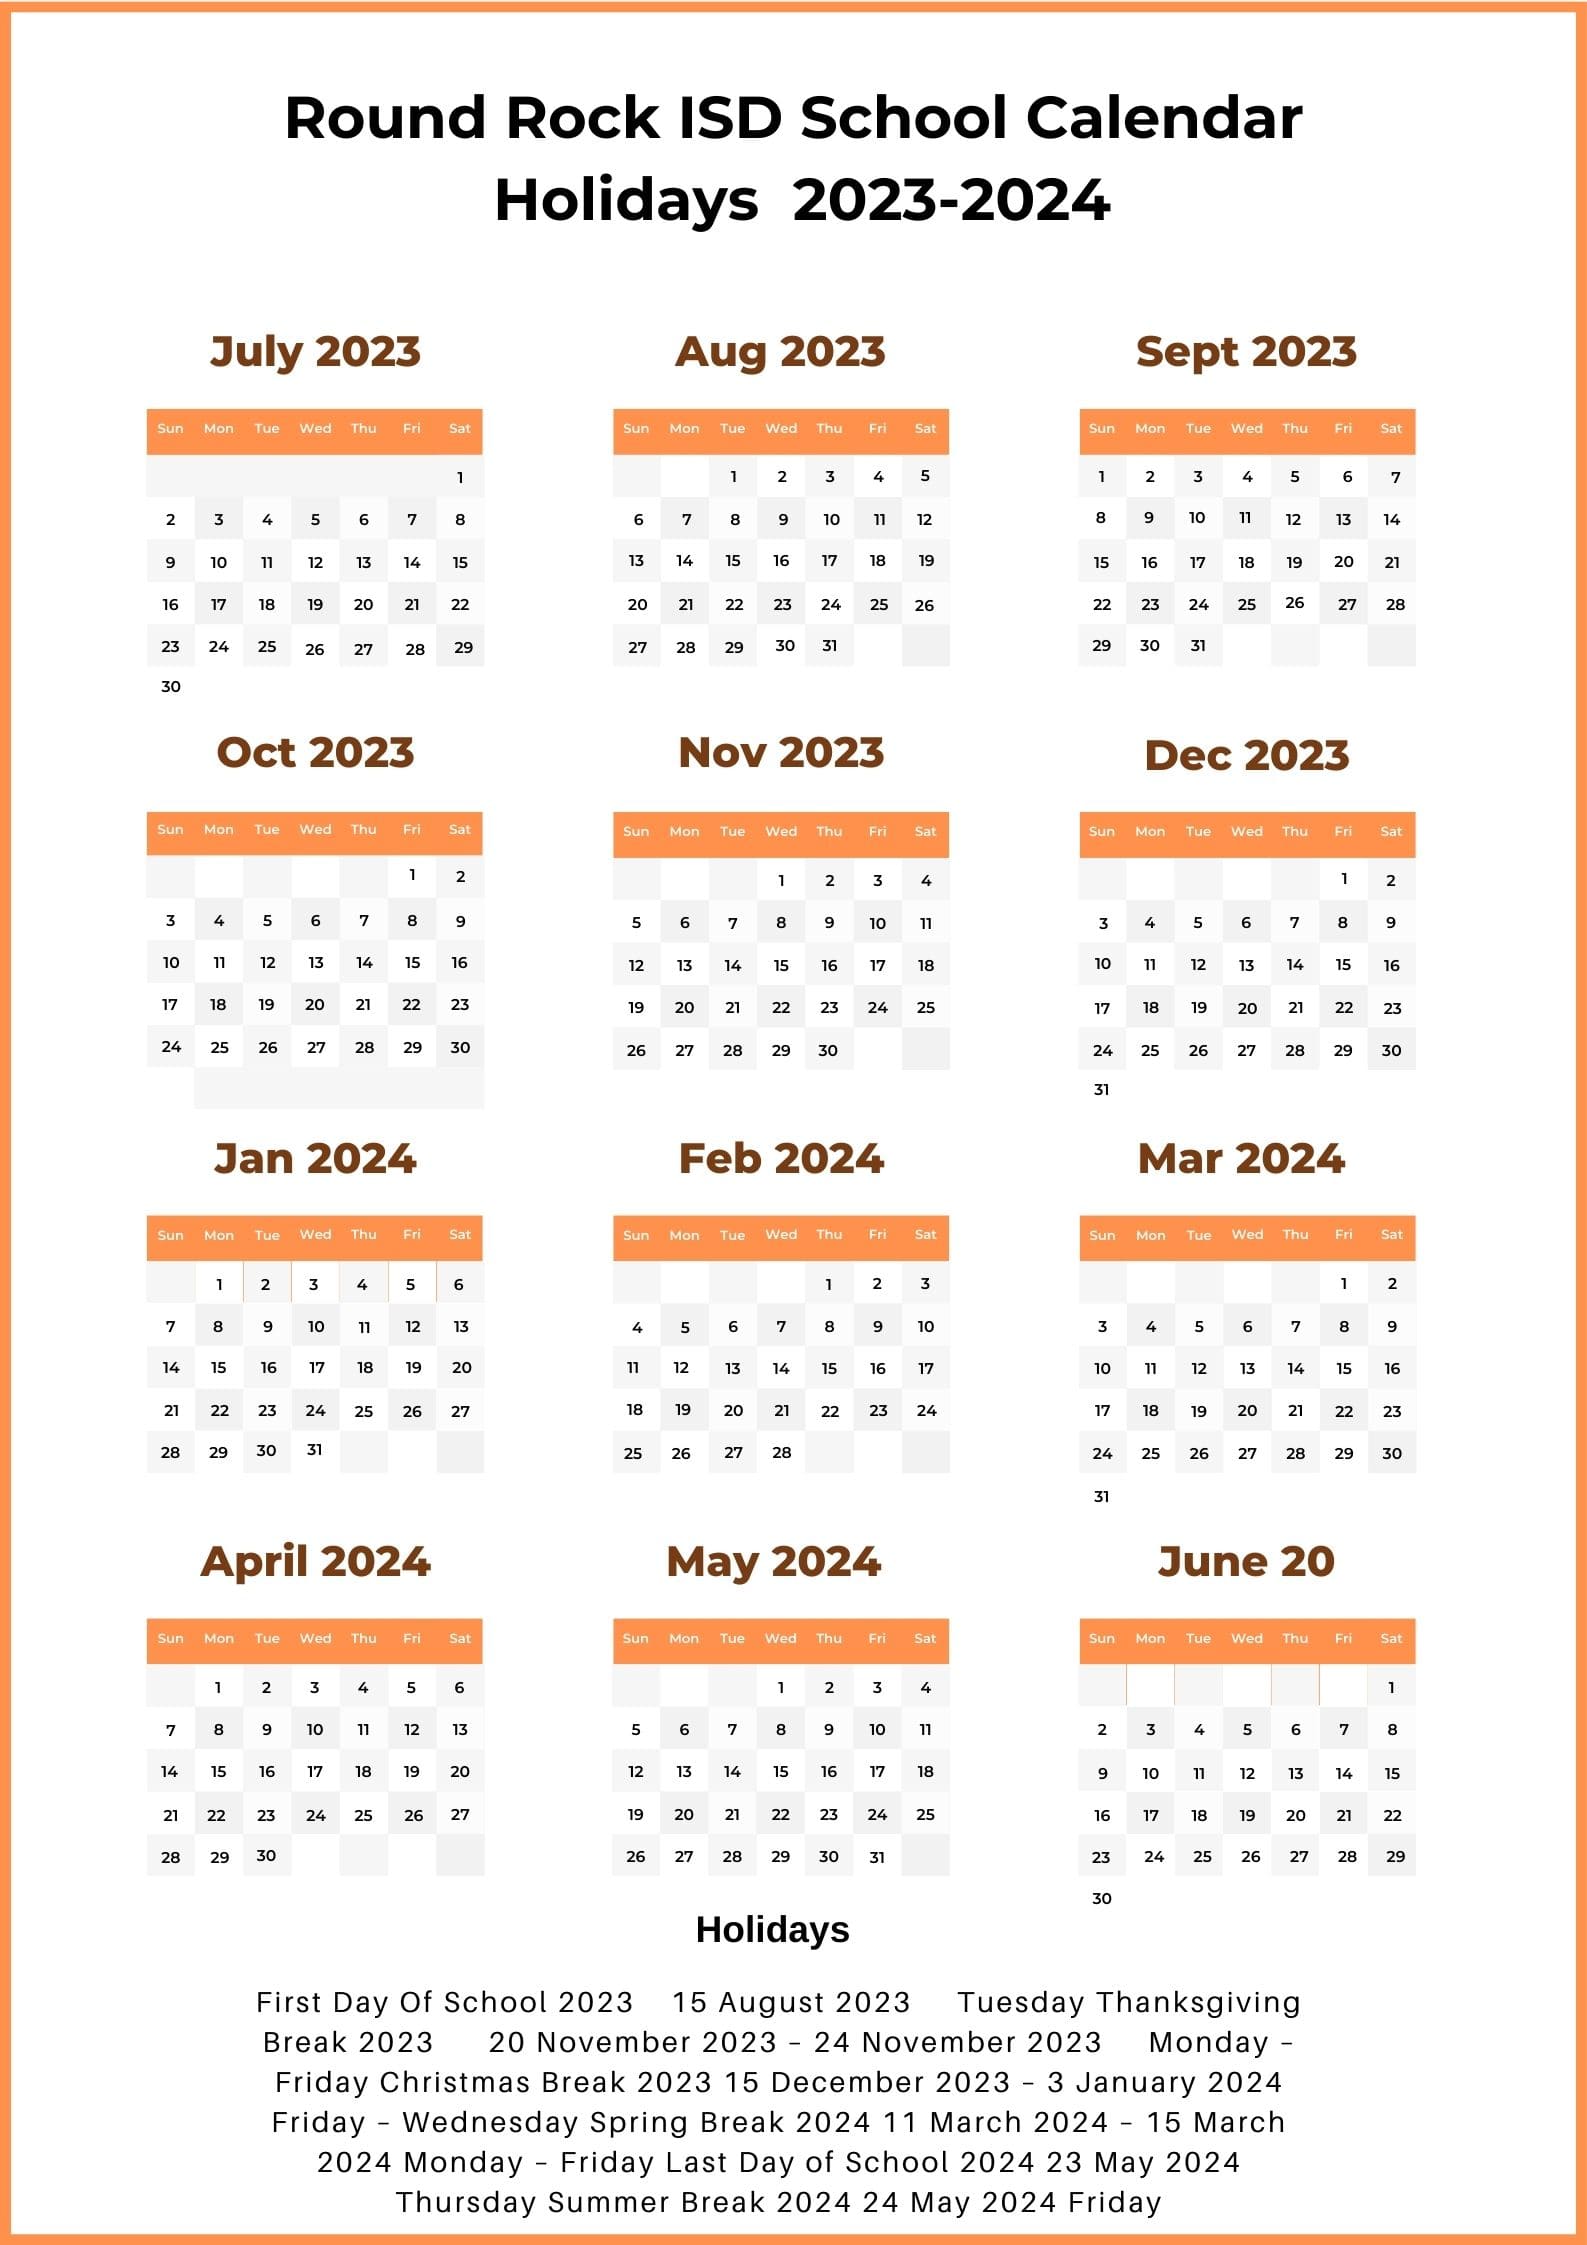 rrisd-school-calendar-holidays-2023-2024-round-rock-isd